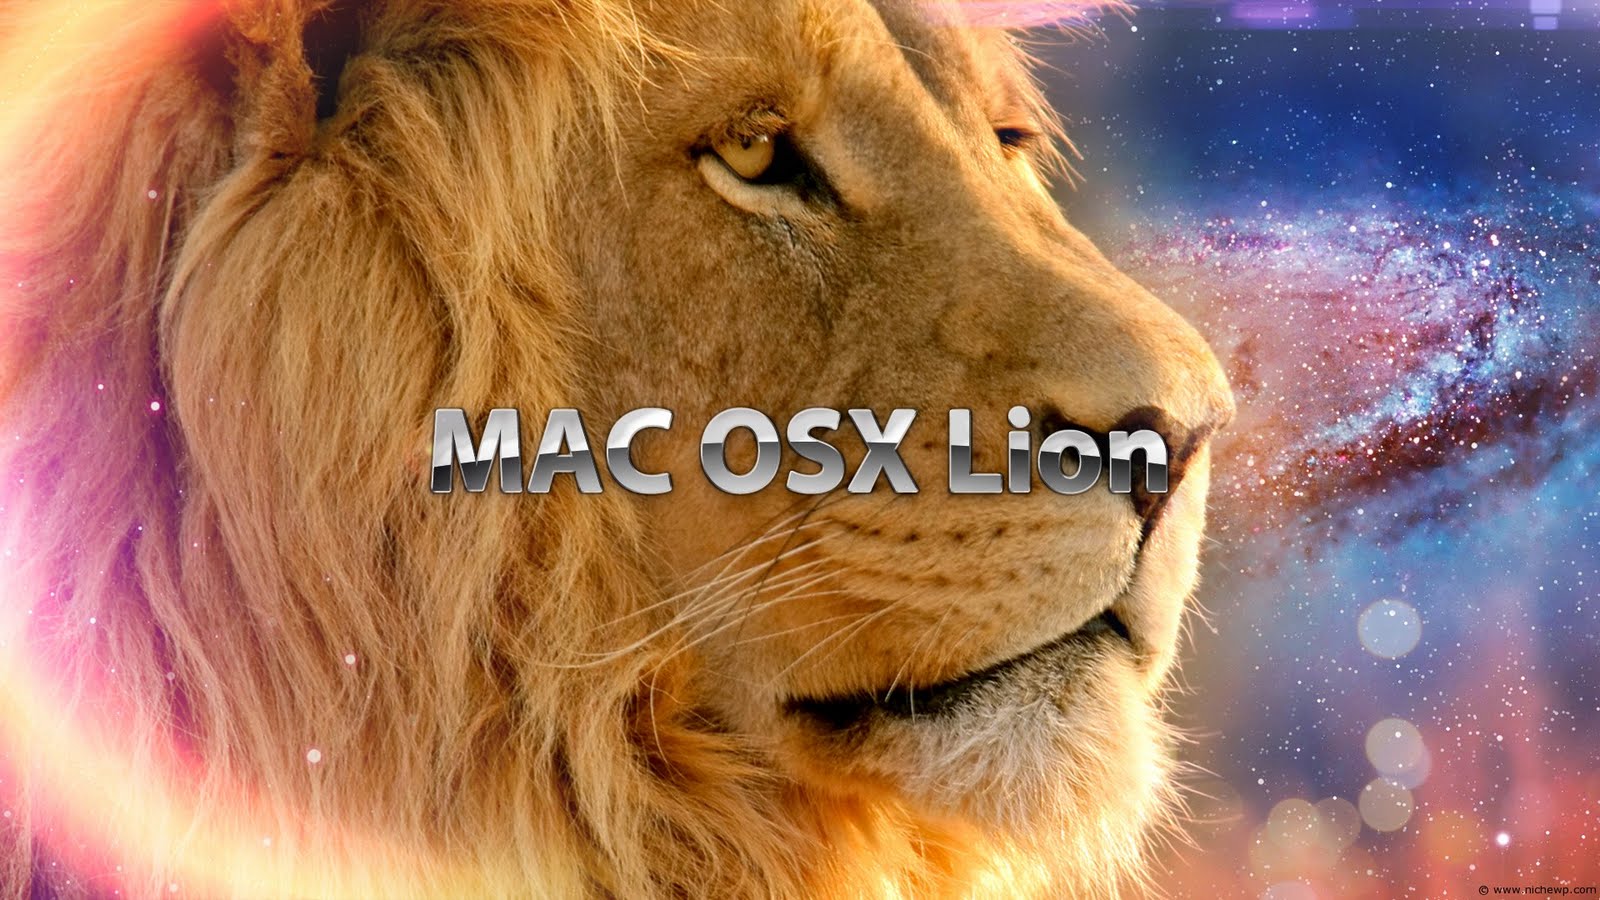 http://3.bp.blogspot.com/-0itr5FbmuSc/TjE8eoCUZGI/AAAAAAAACEM/1o3AkvFLO0E/s1600/Mac+OSX+Lion+Wallpaper.jpg